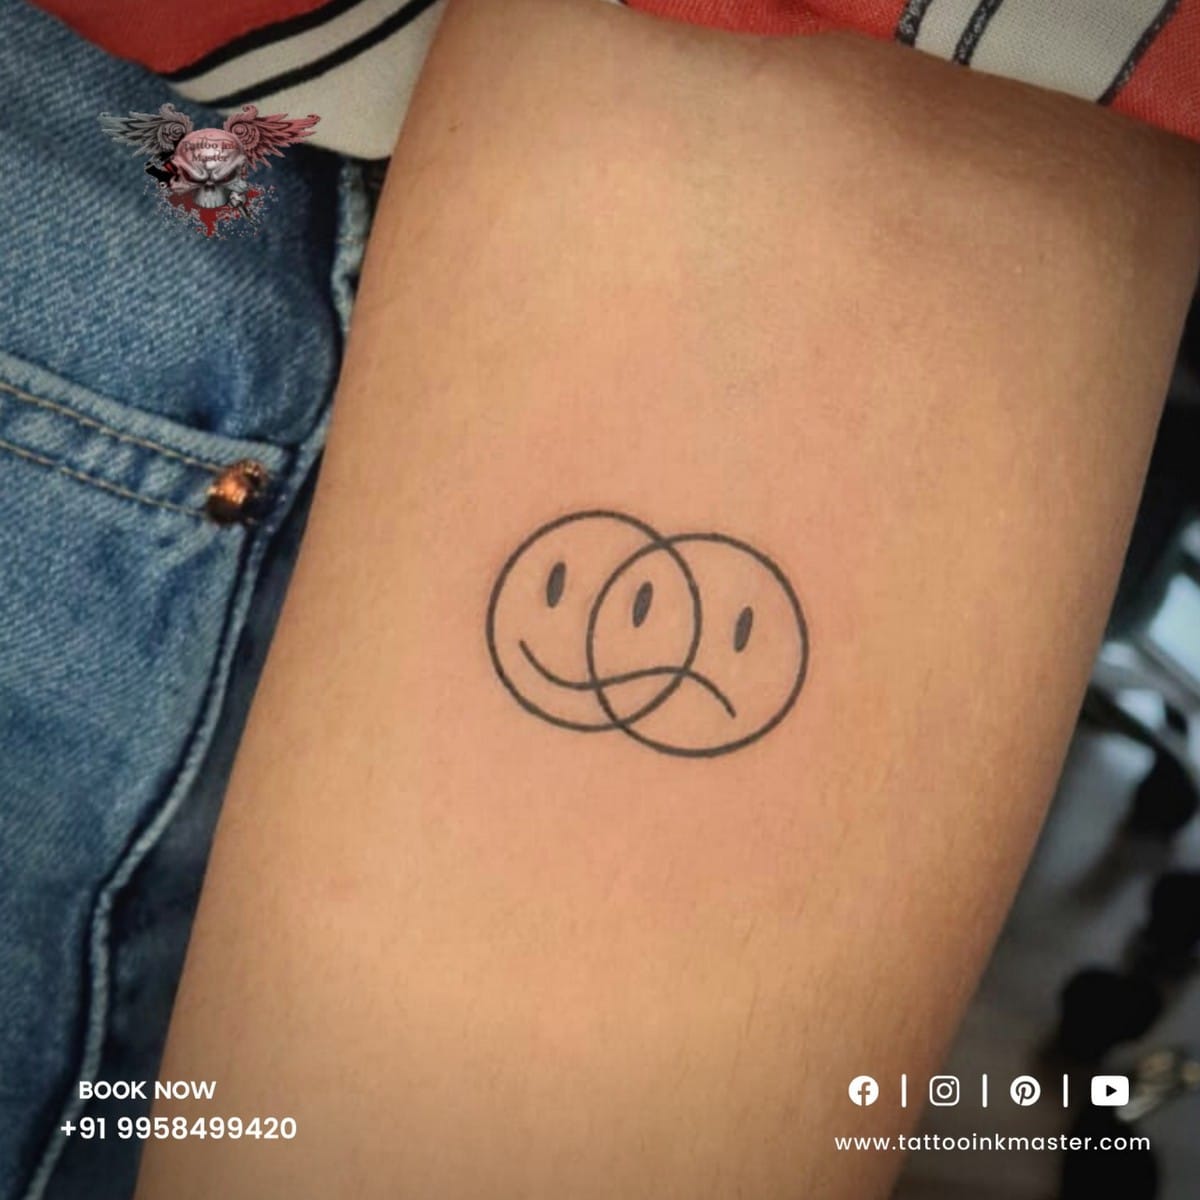 Tattoo uploaded by Χρυσάνθη Δεμερτζή • Couple smiley tattoo • Tattoodo